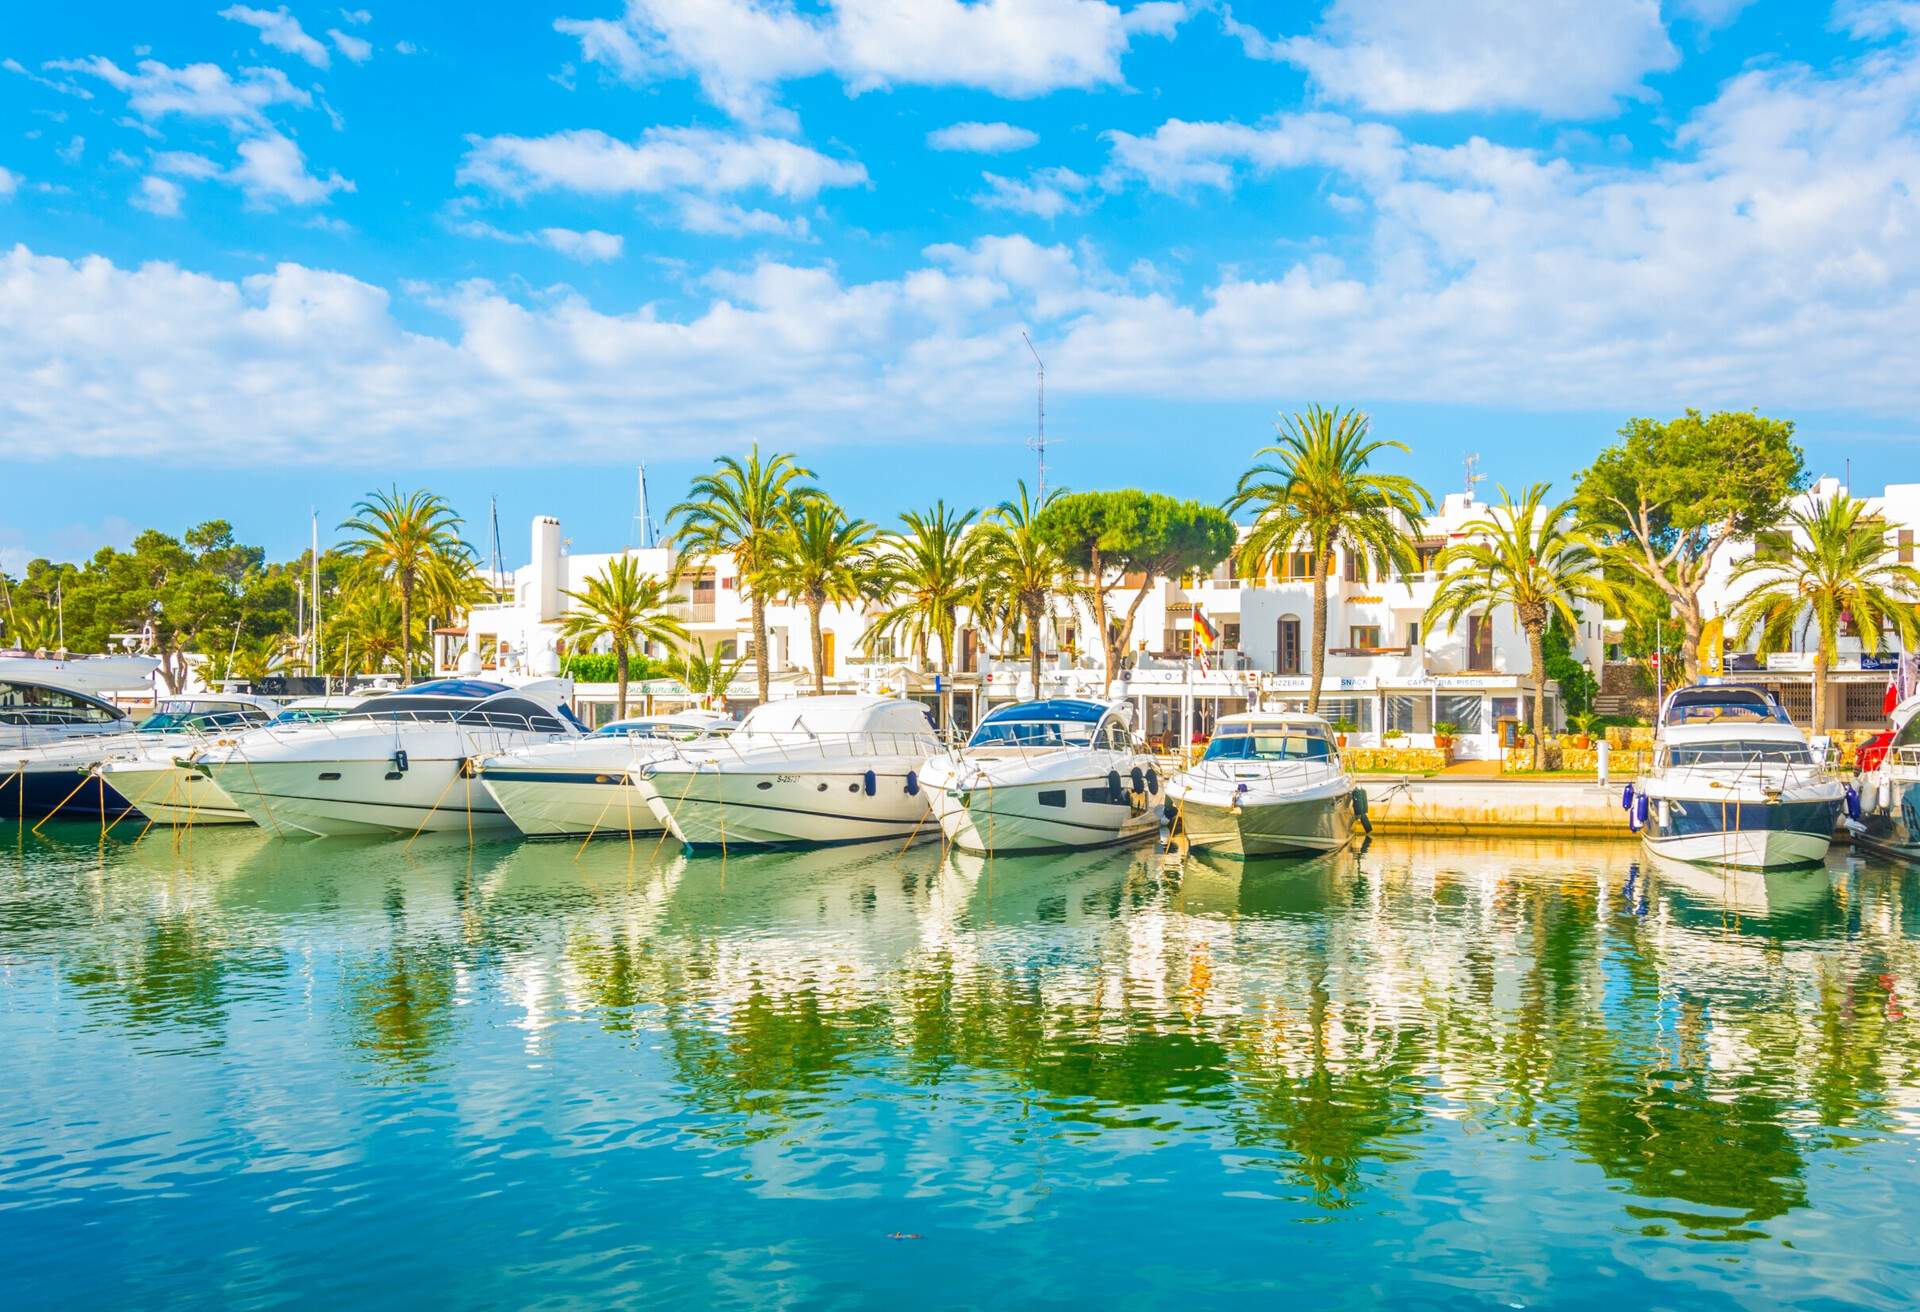 Marina at Cala D'Or, Mallorca, Spain.; Shutterstock ID 1131574217